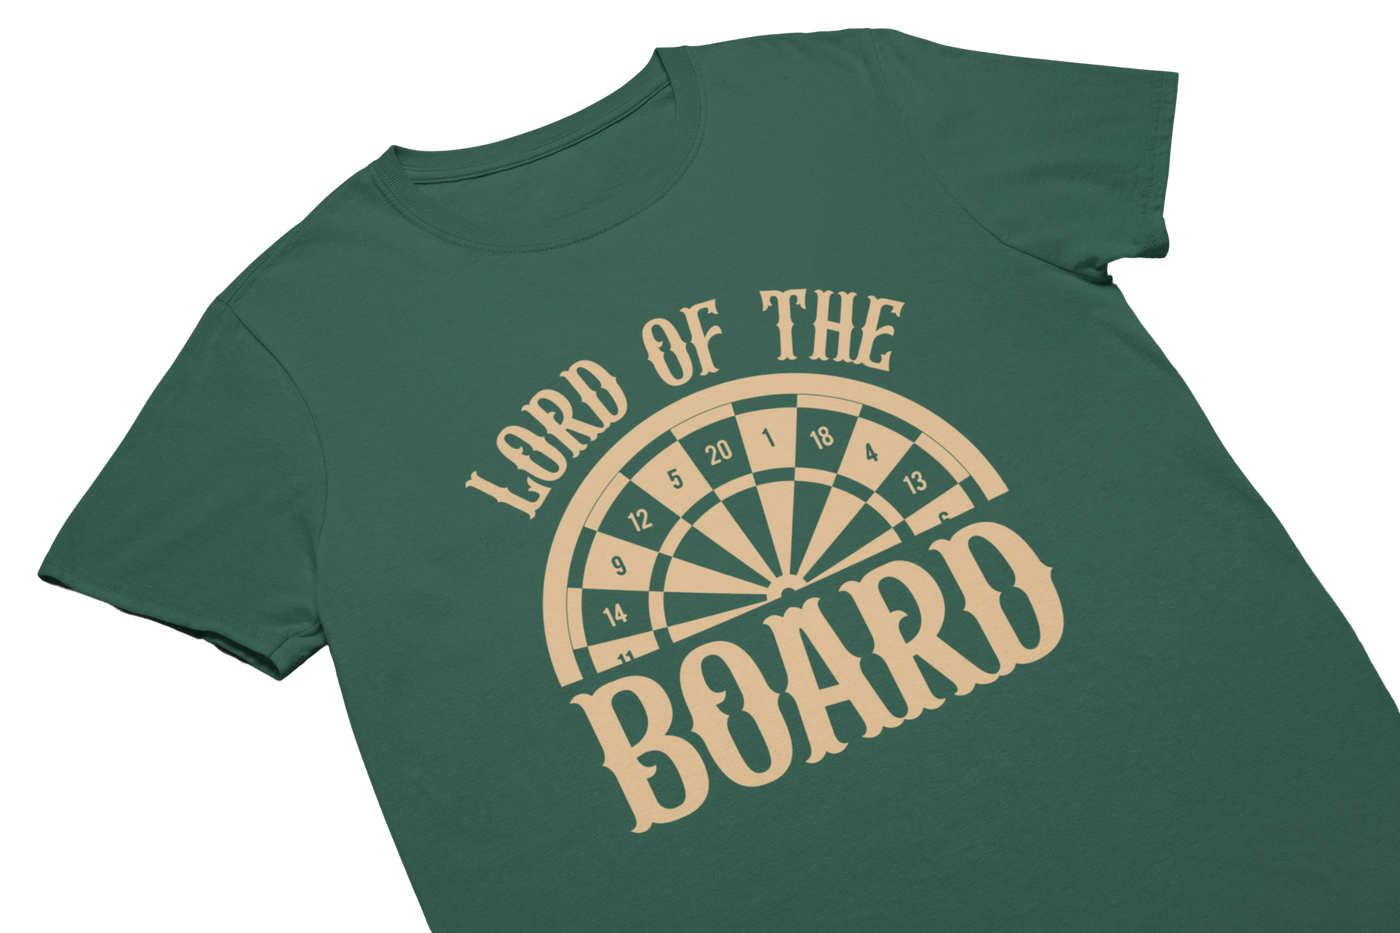 LORD OF THE BOARD - T-Shirt Grün